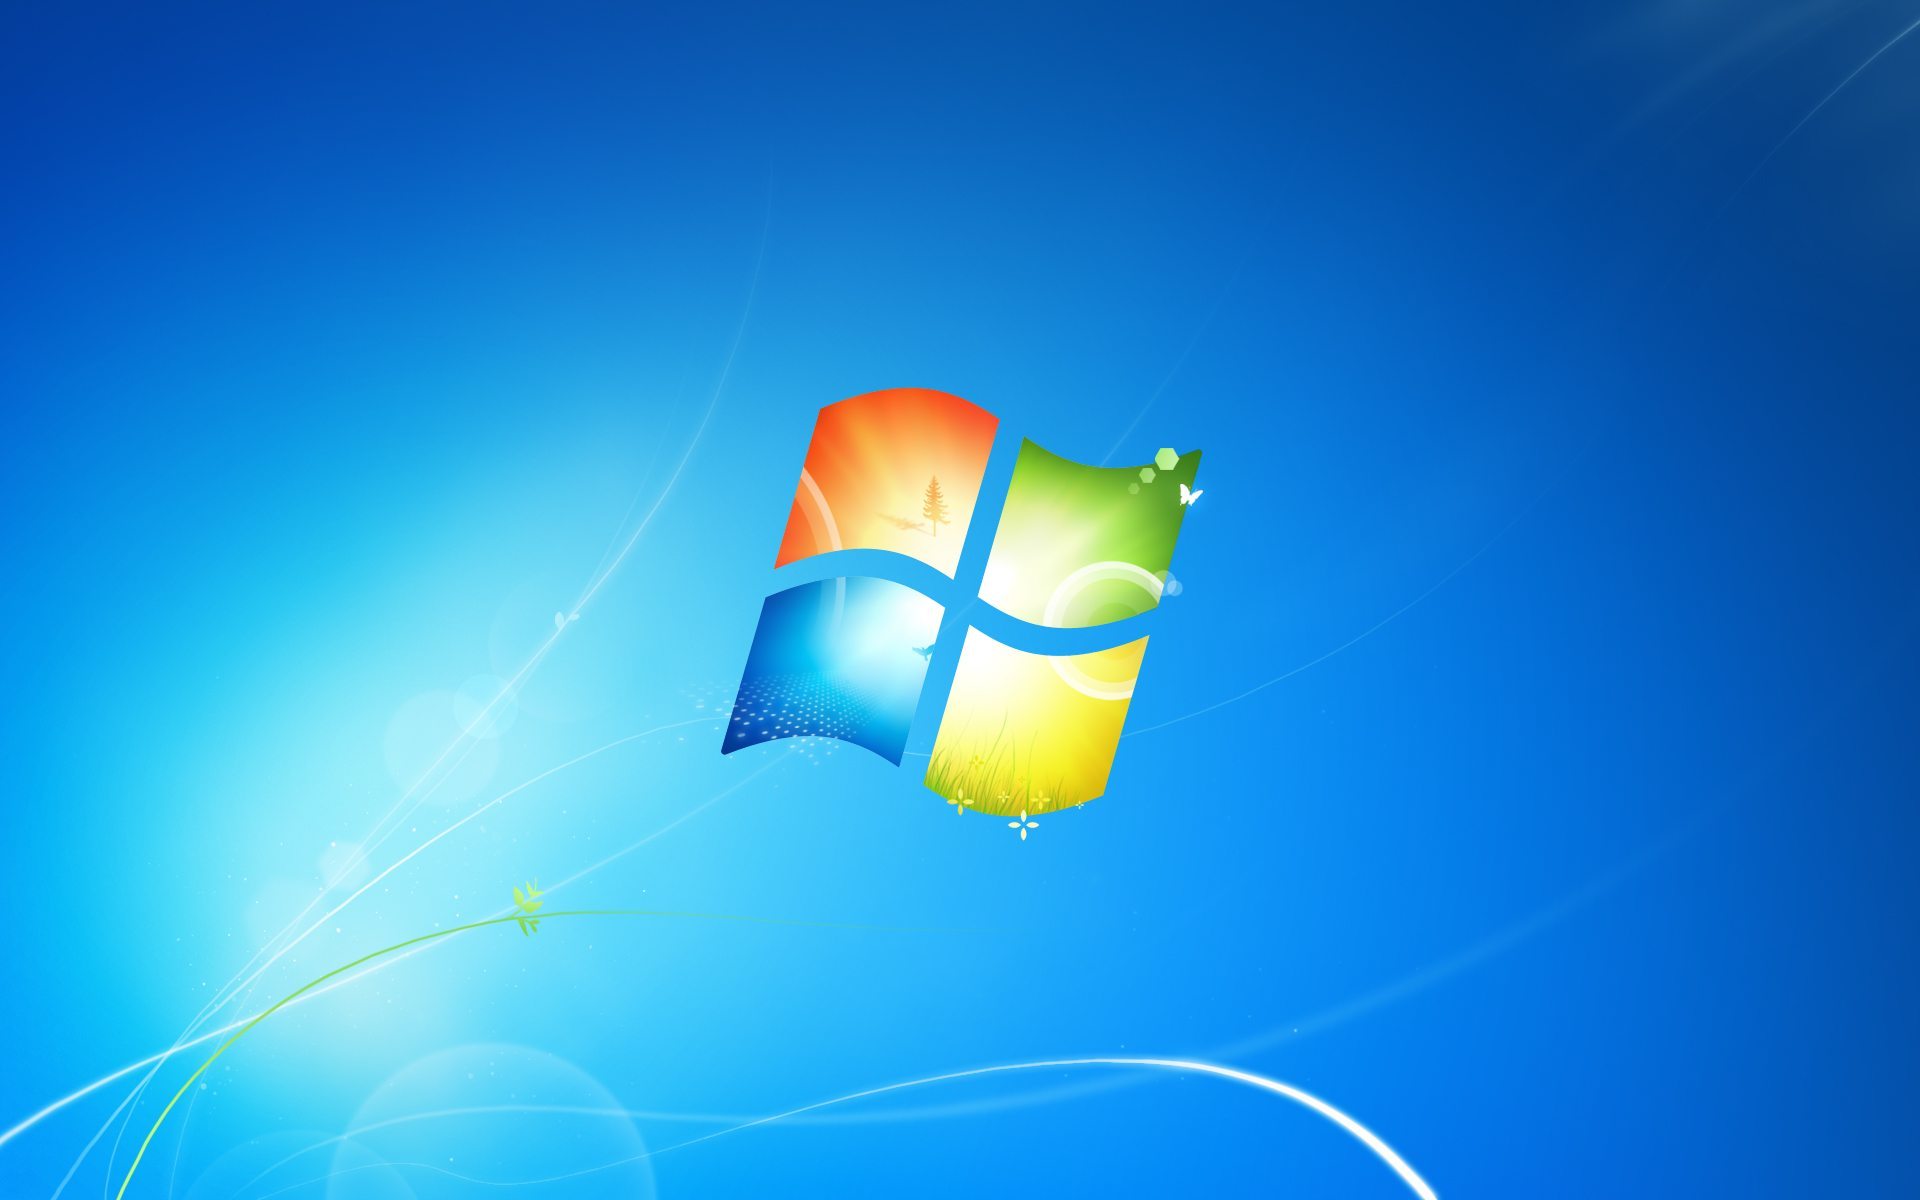 Windows vista desktop backgrounds